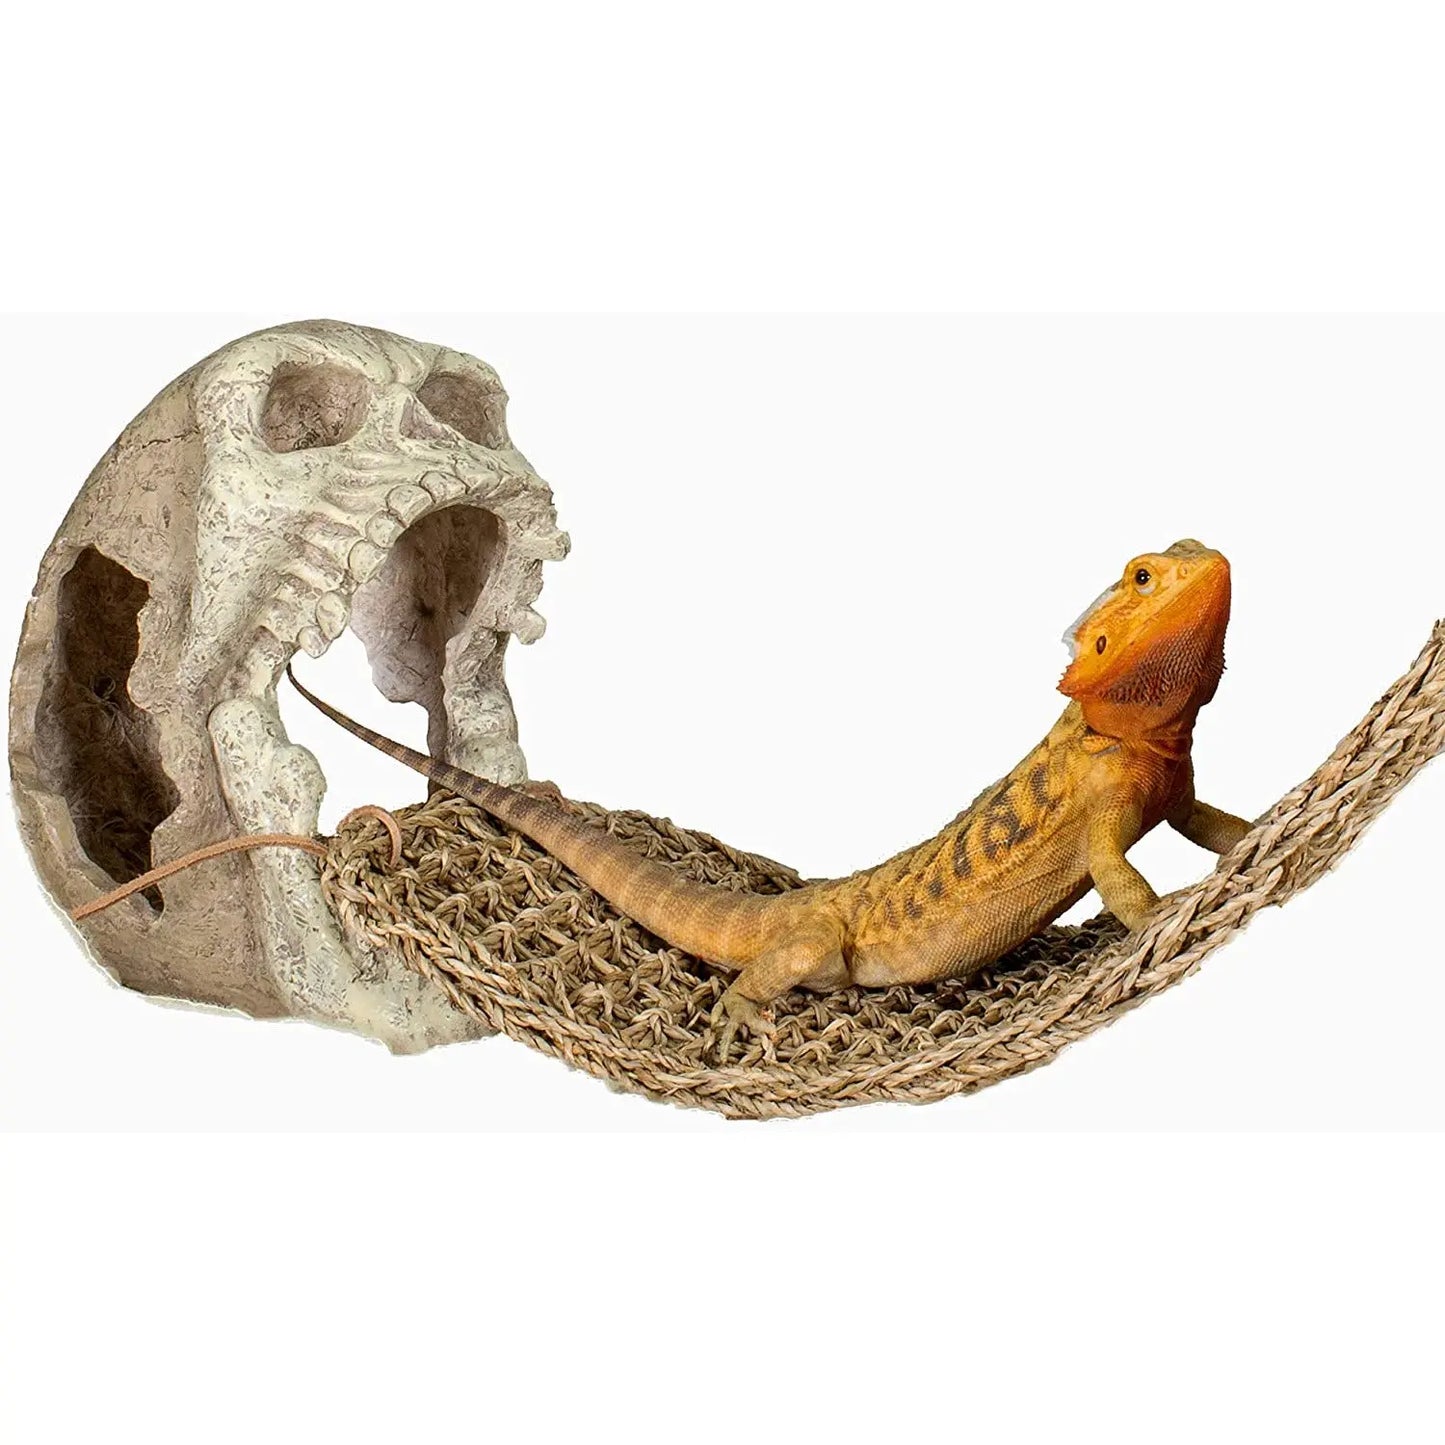 Reptology Skull Hide-Away Habitat Décor Reptology